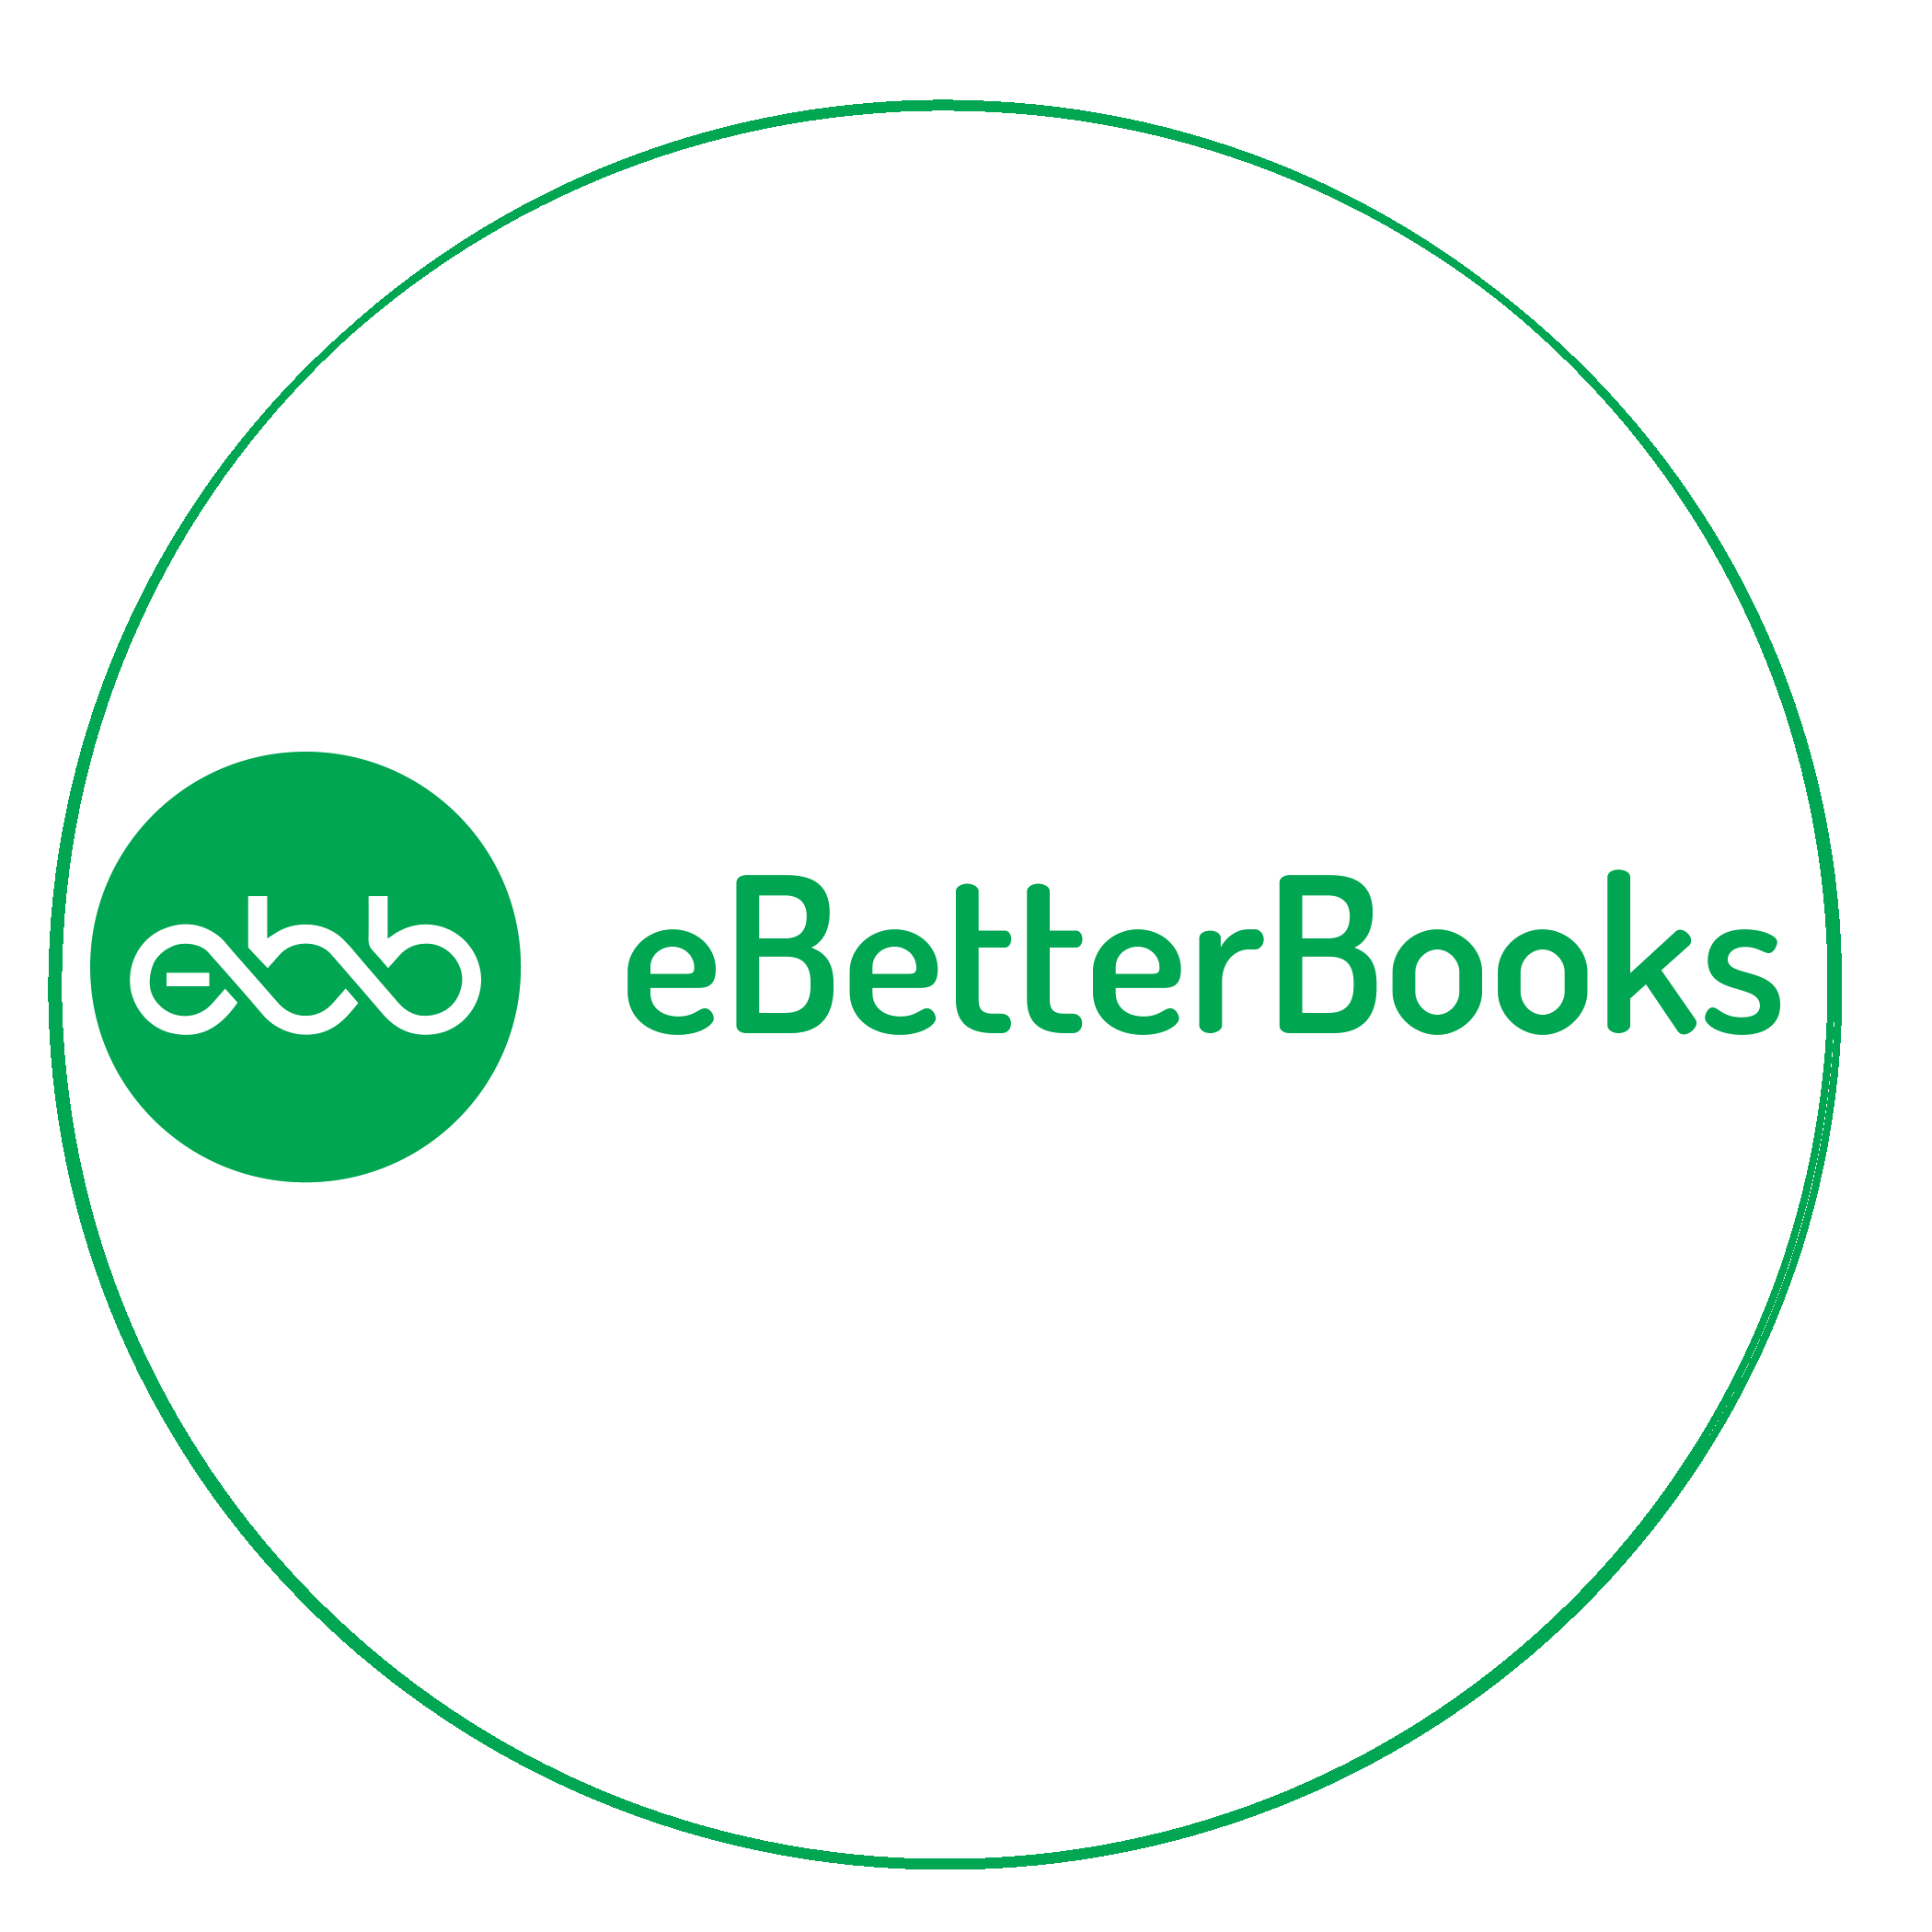 eBetterBooks